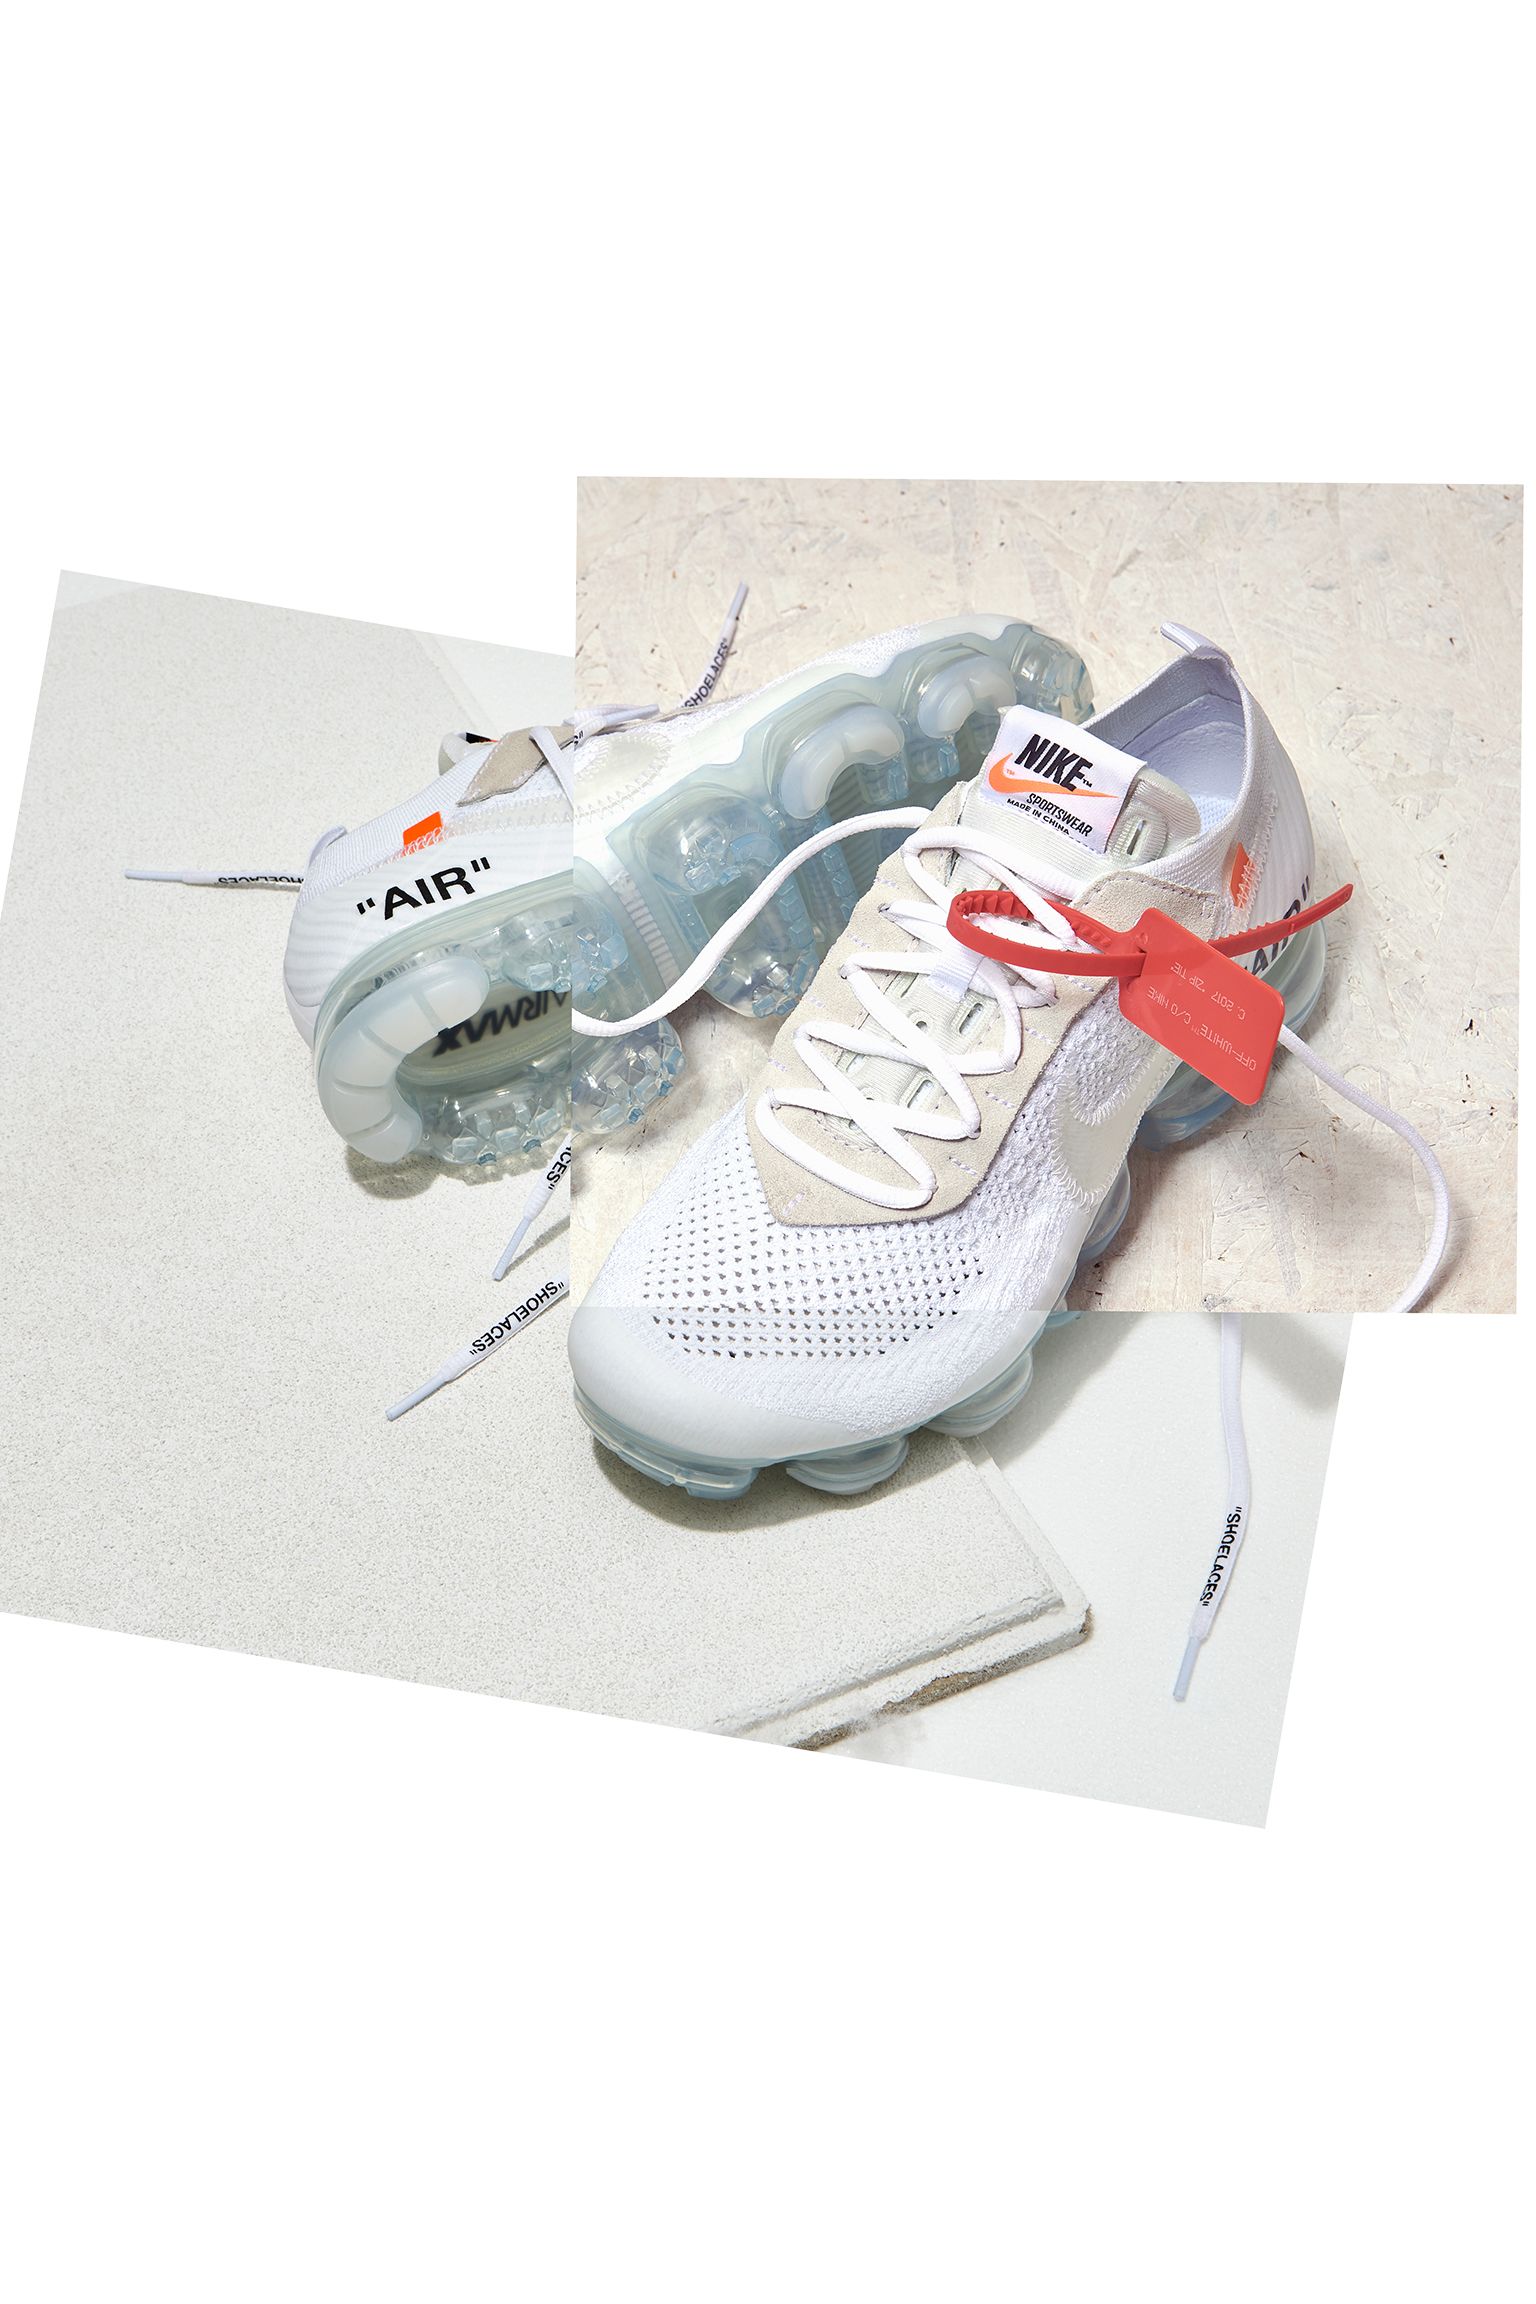 Hecho de sequía El uno al otro Nike The Ten Air Vapormax Off-White 'White' Release Date. Nike SNKRS